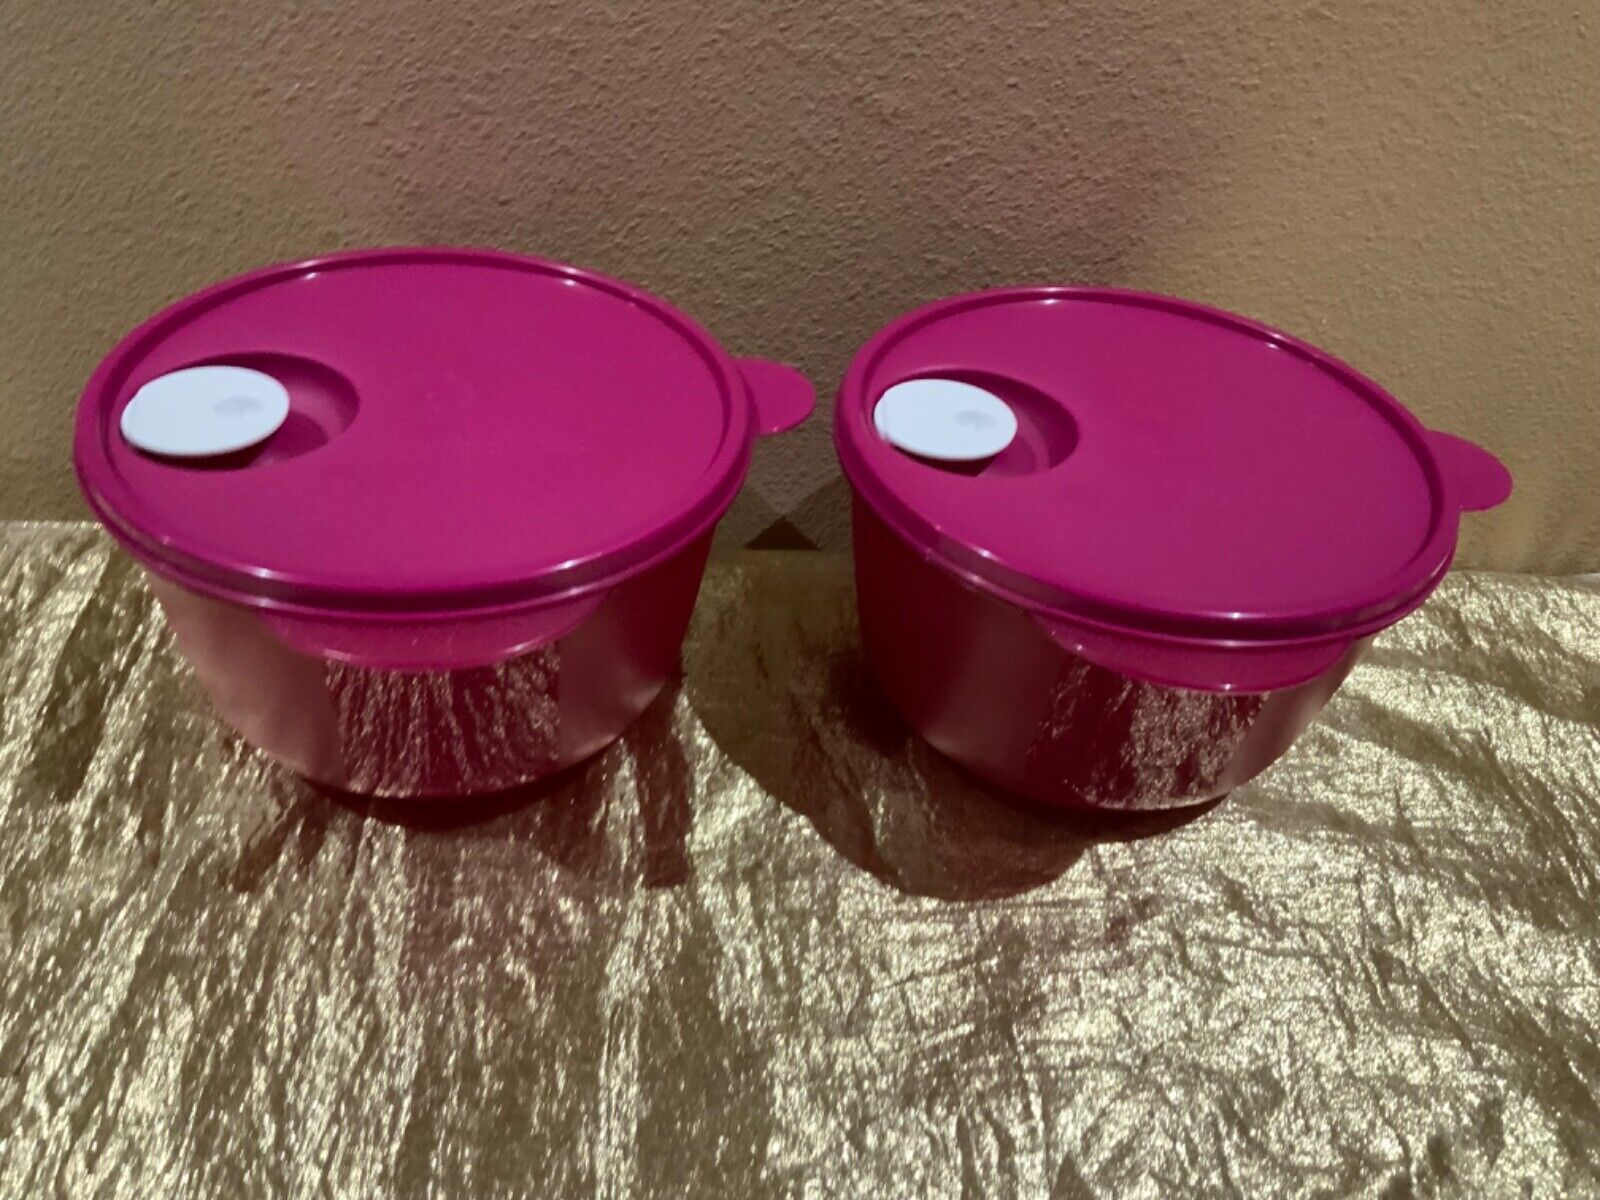 New Tupperware Set of 2 Microwave Reheatable Bowls 1.8L each In Vineyard Color